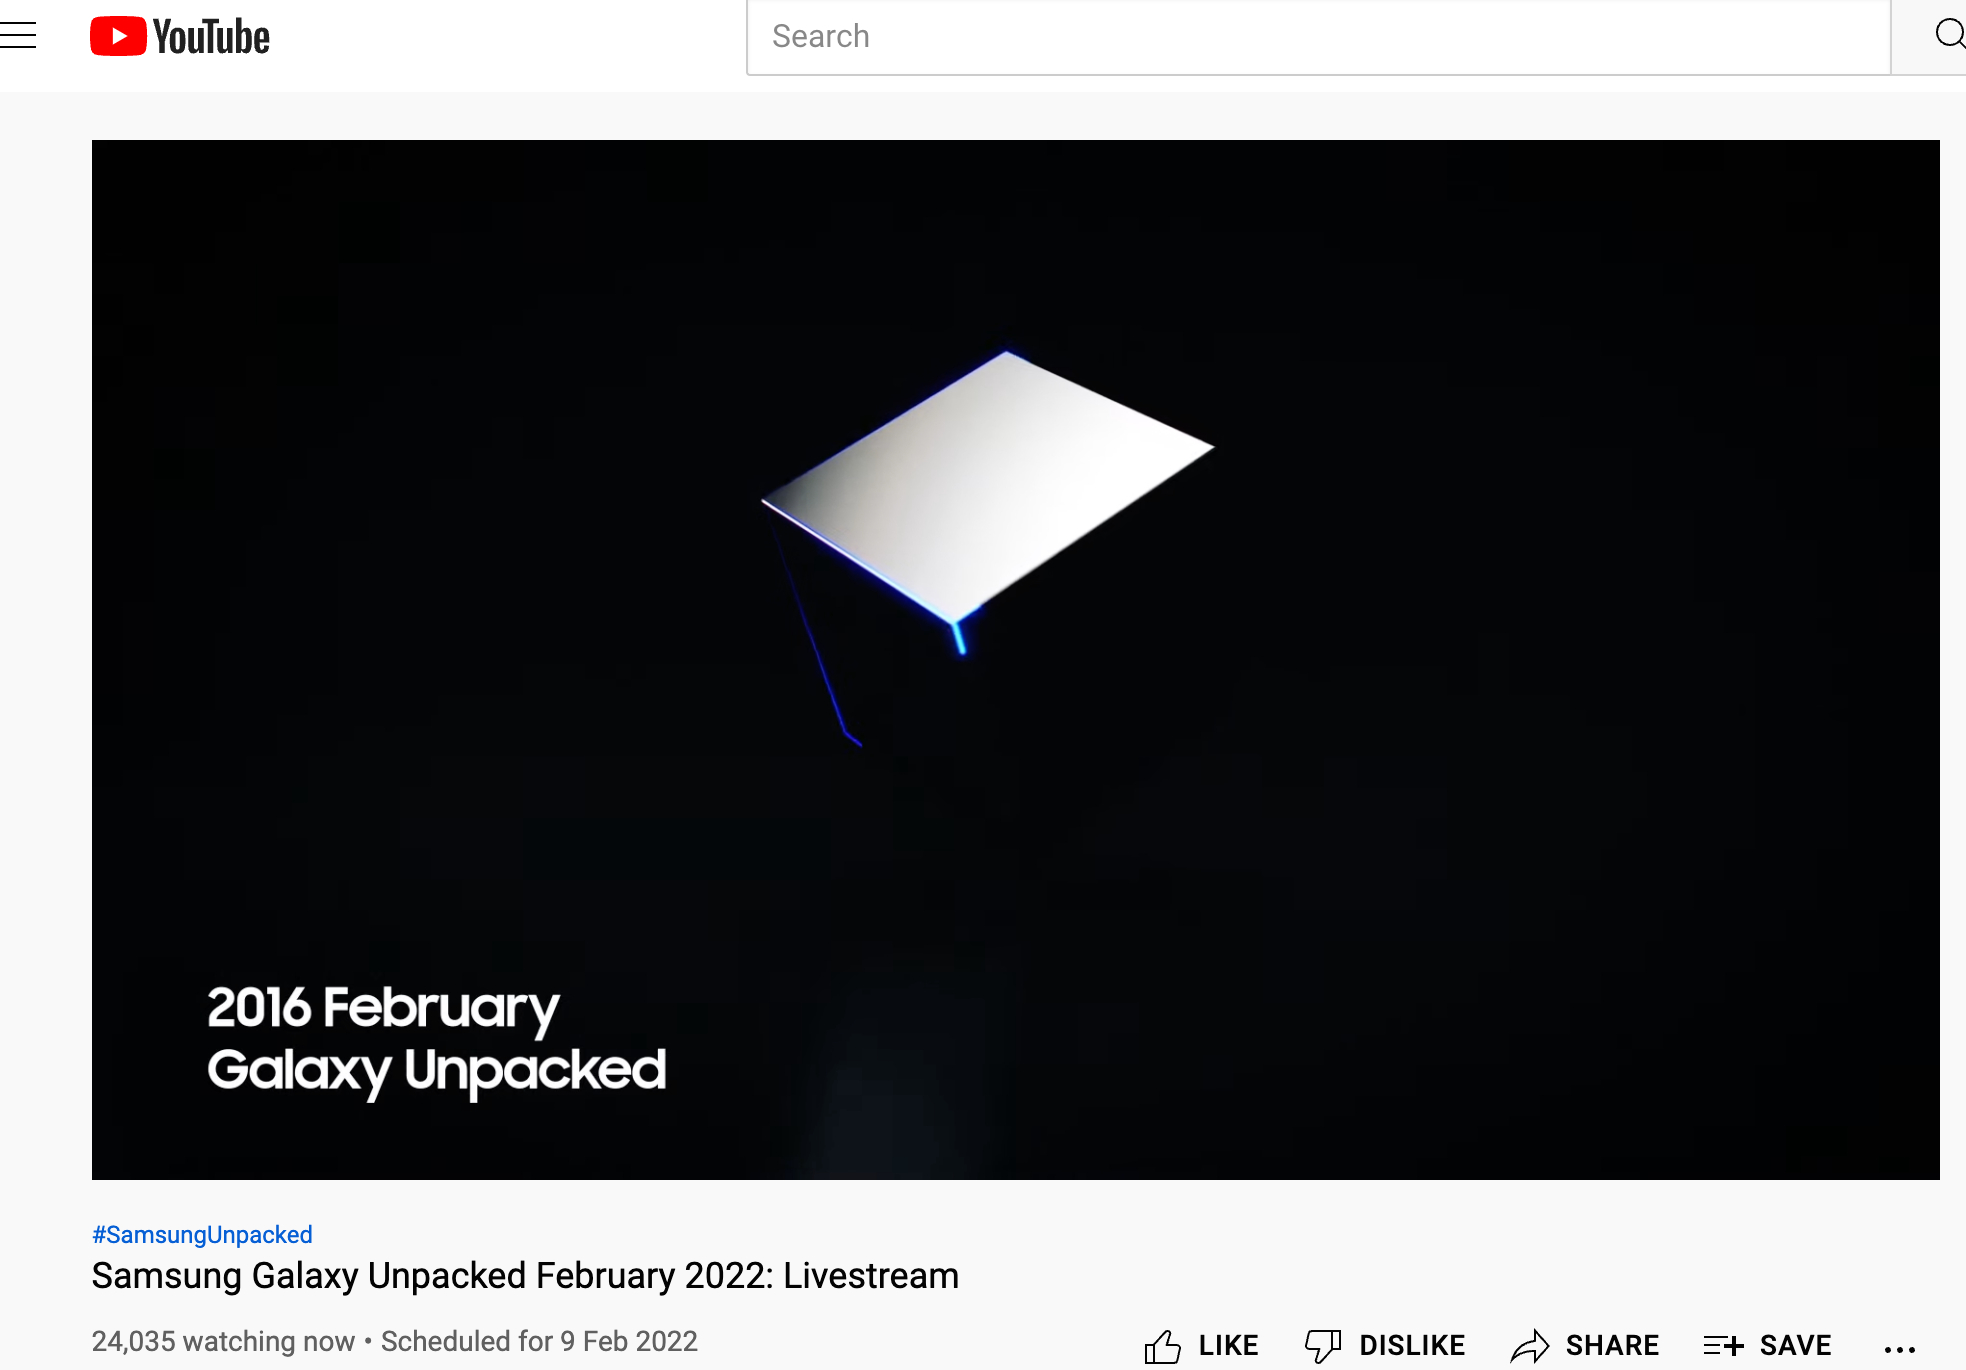 Samsung Unpacked live stream